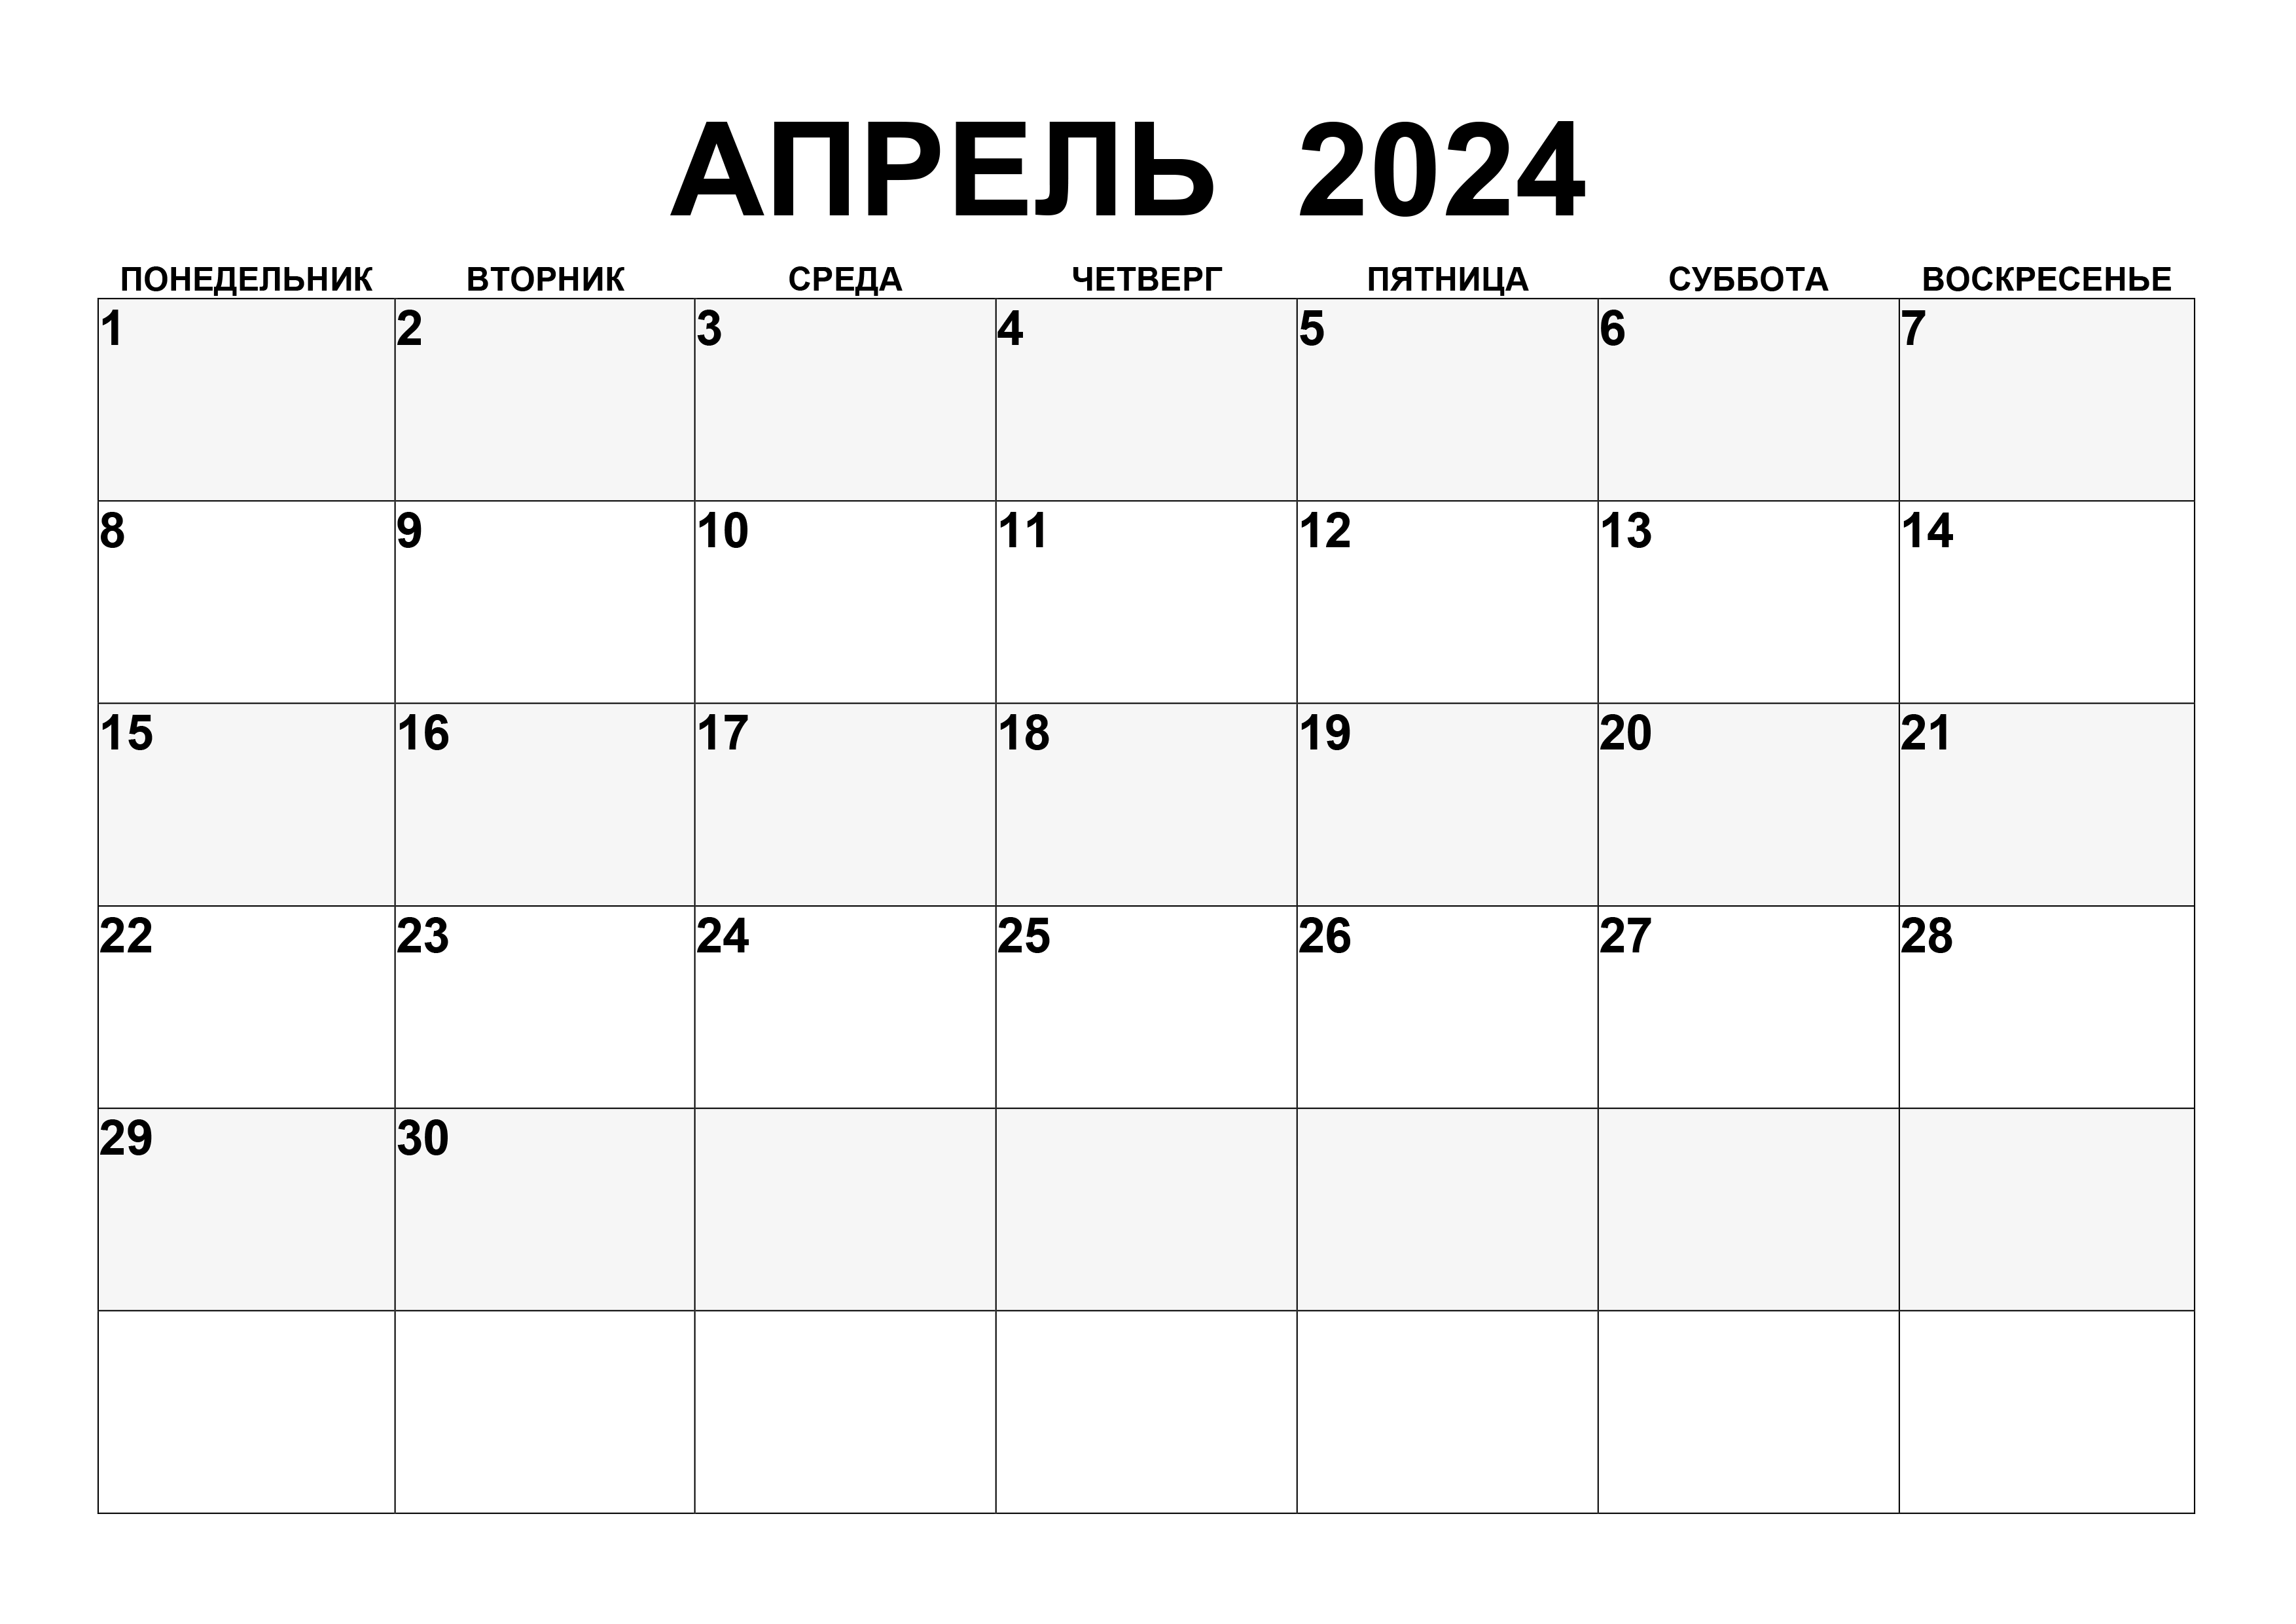 Дни стрижек в апреле 2024 г. Календарь апрель 2024. Календарь на апр 2024. Rfktylfhm YF fghktm 2024.